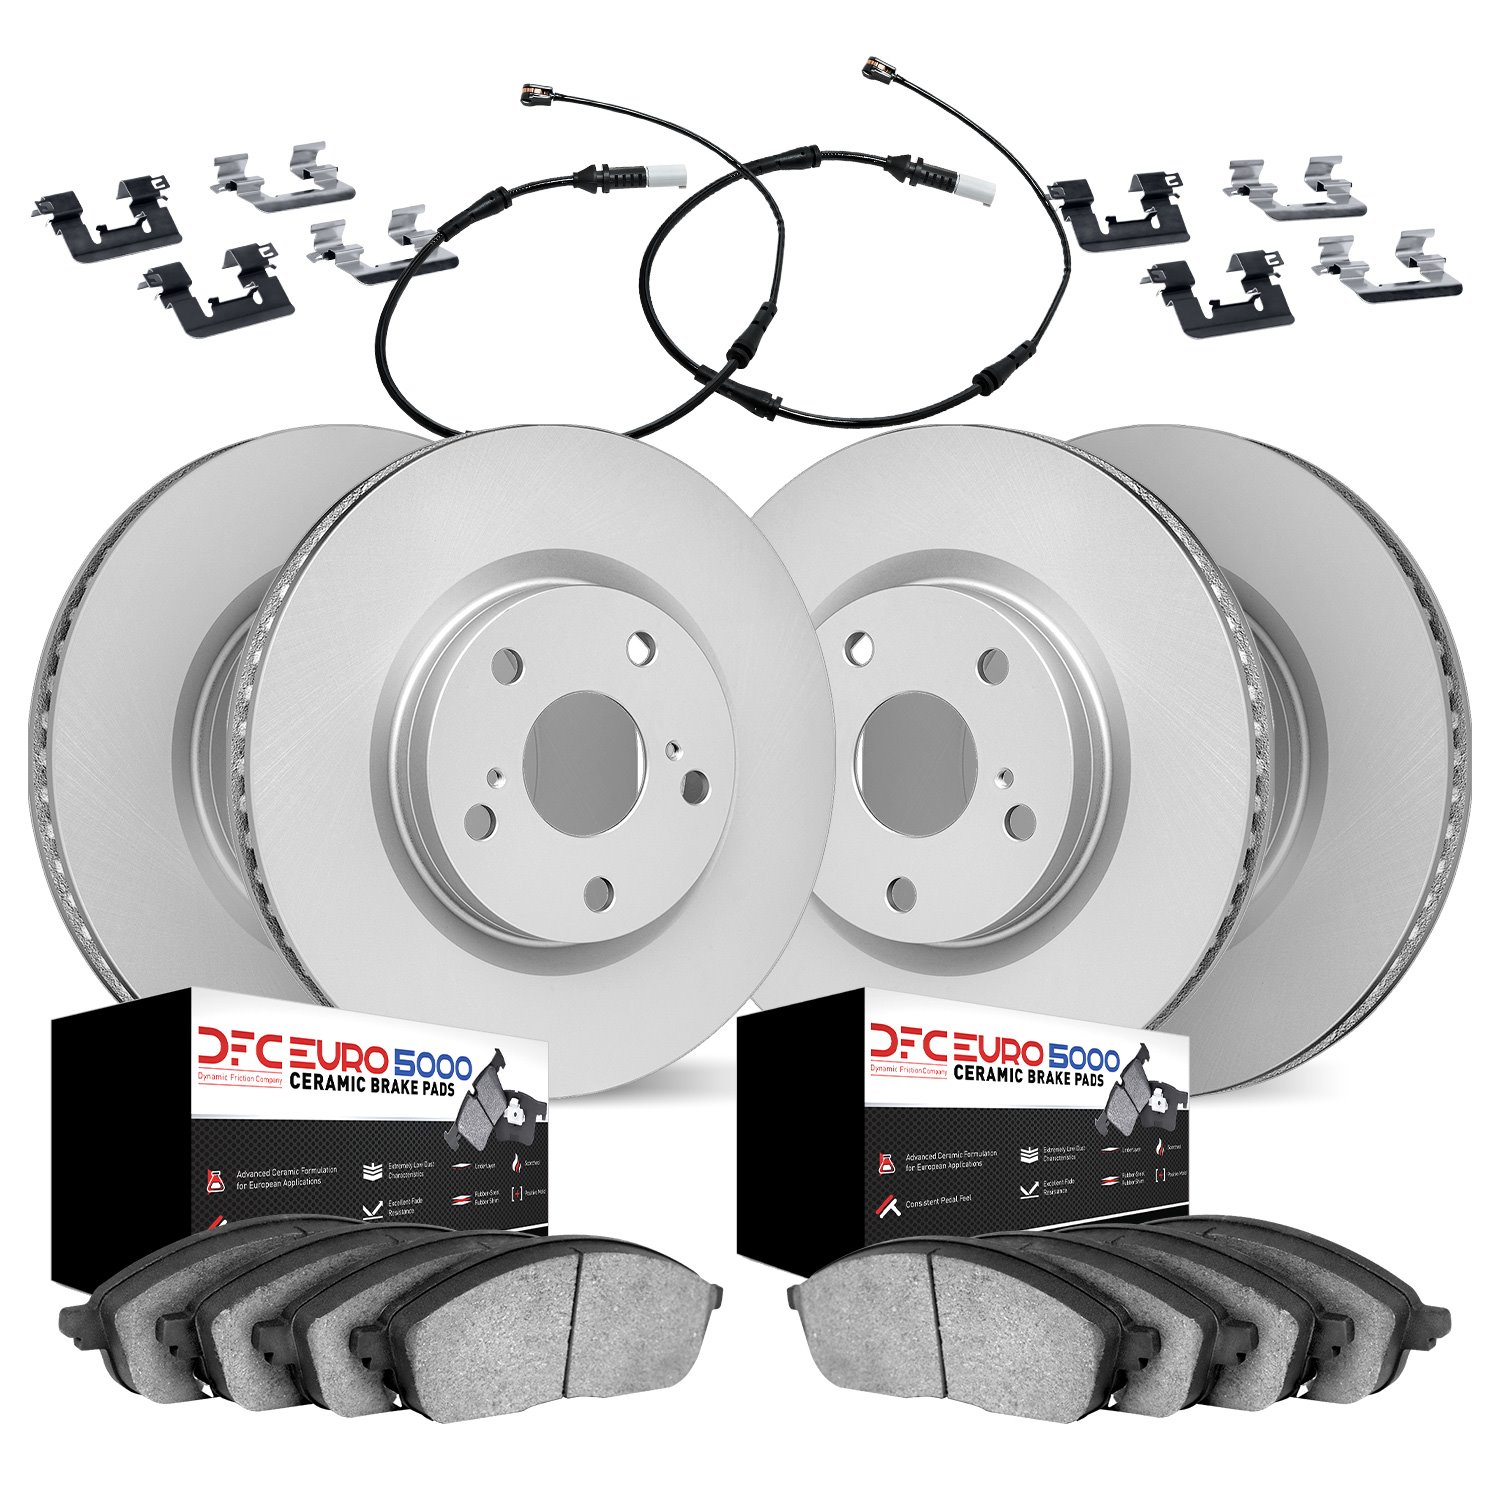 4624-12750 Geospec Brake Rotors w/5000 Euro Ceramic Brake Pads/Sensor & Hardware Kit, Fits Select Multiple Makes/Models, Positio